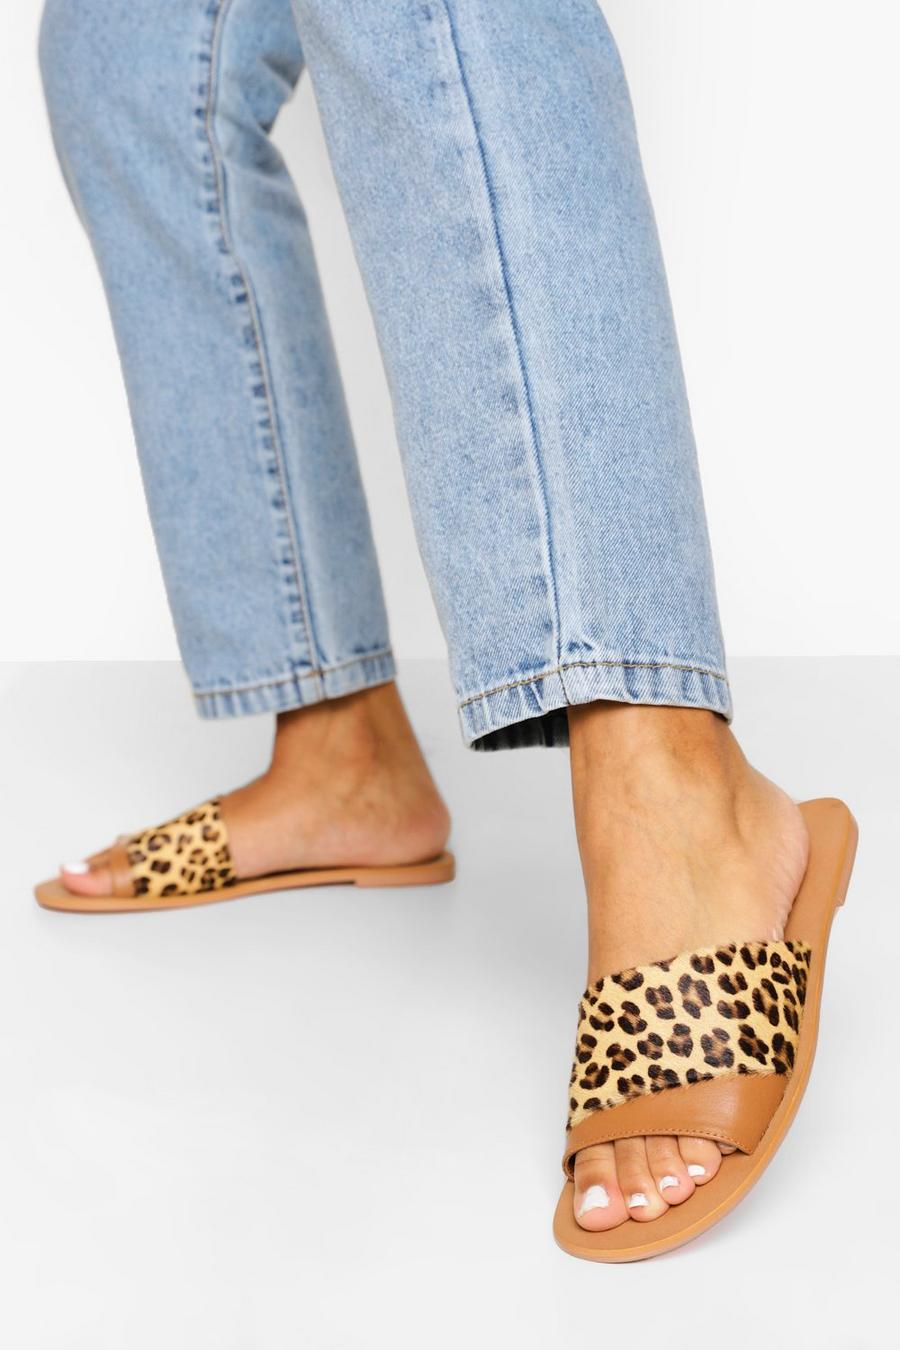 Sandalias de cuero con paneles contrastados, Leopardo multi